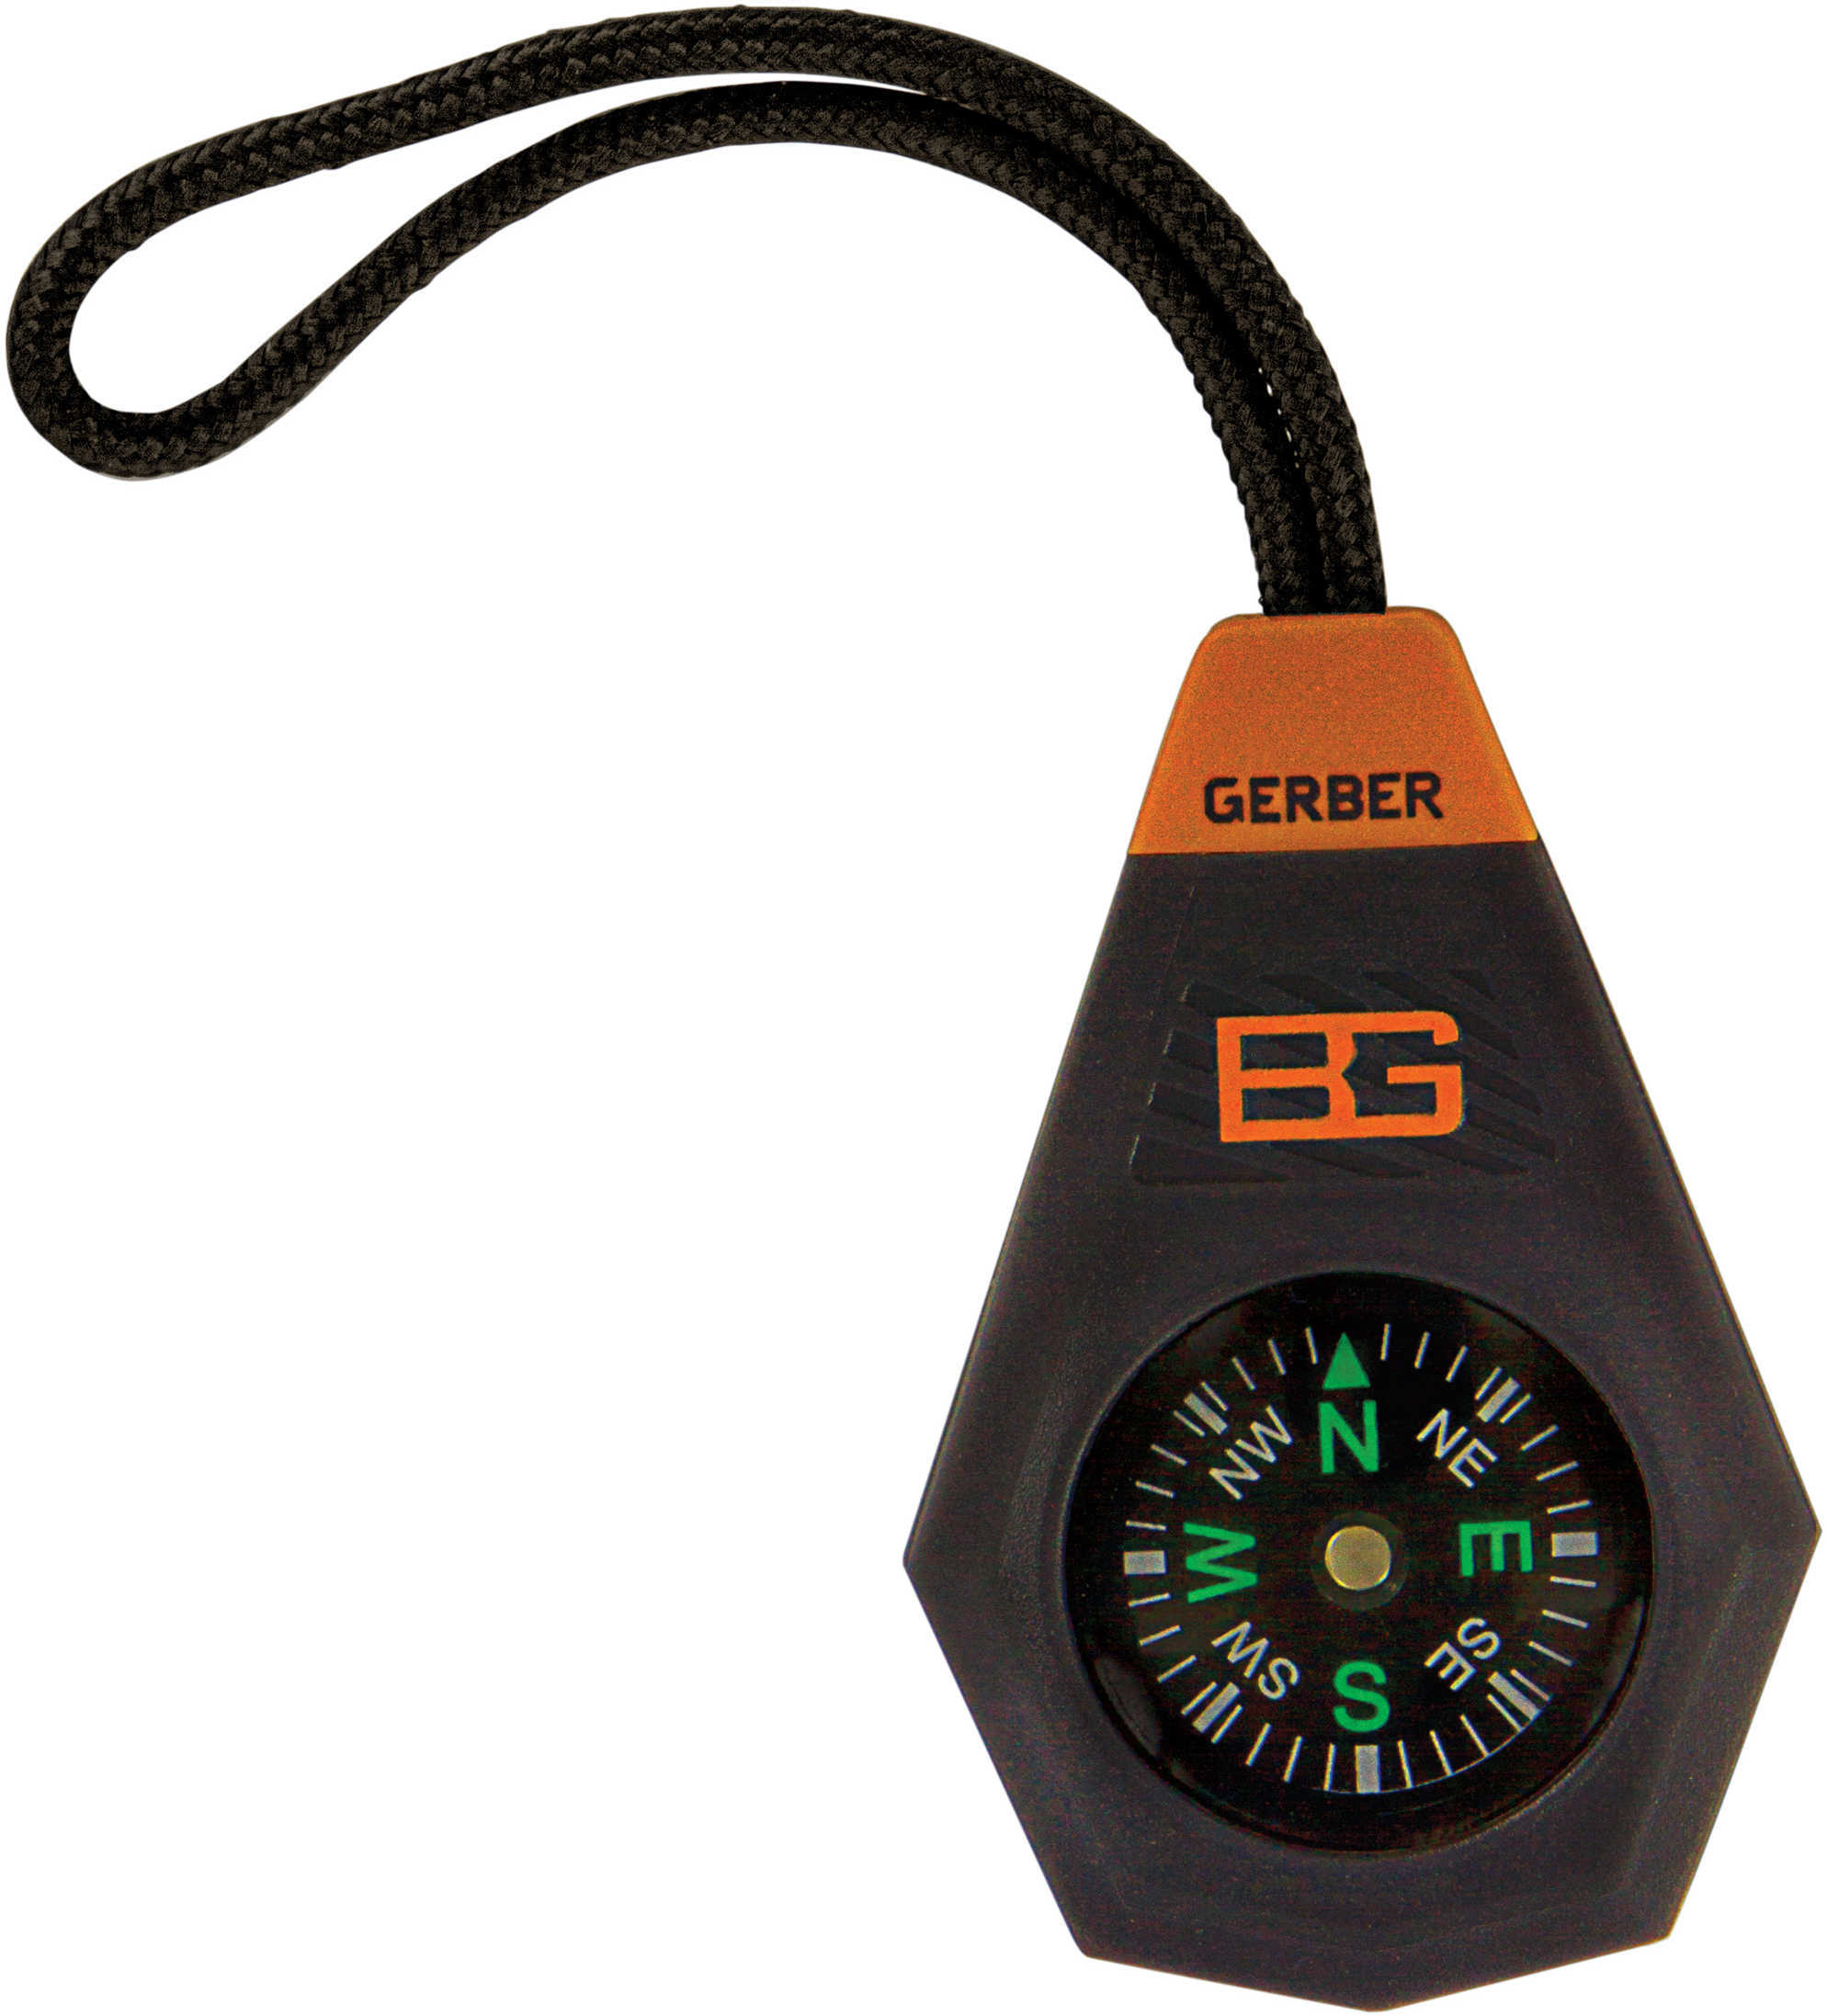 Gerber Bear Grylls Compact Compass